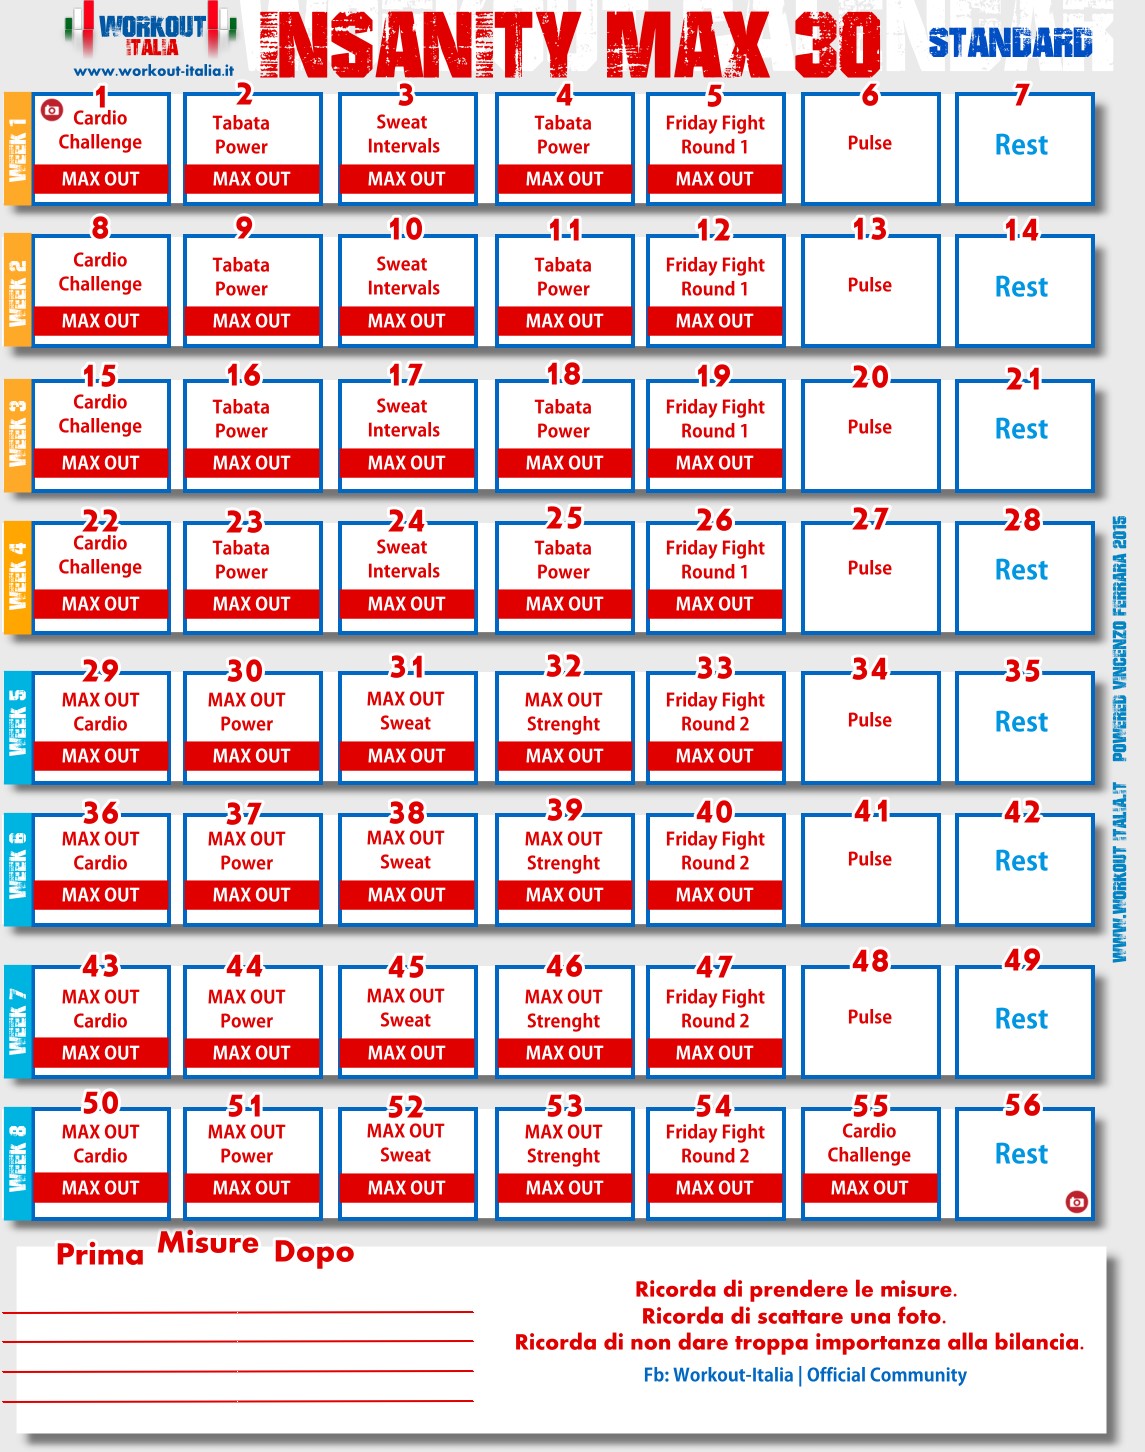 download-the-rack-workout-schedule-pdf-gantt-chart-excel-template